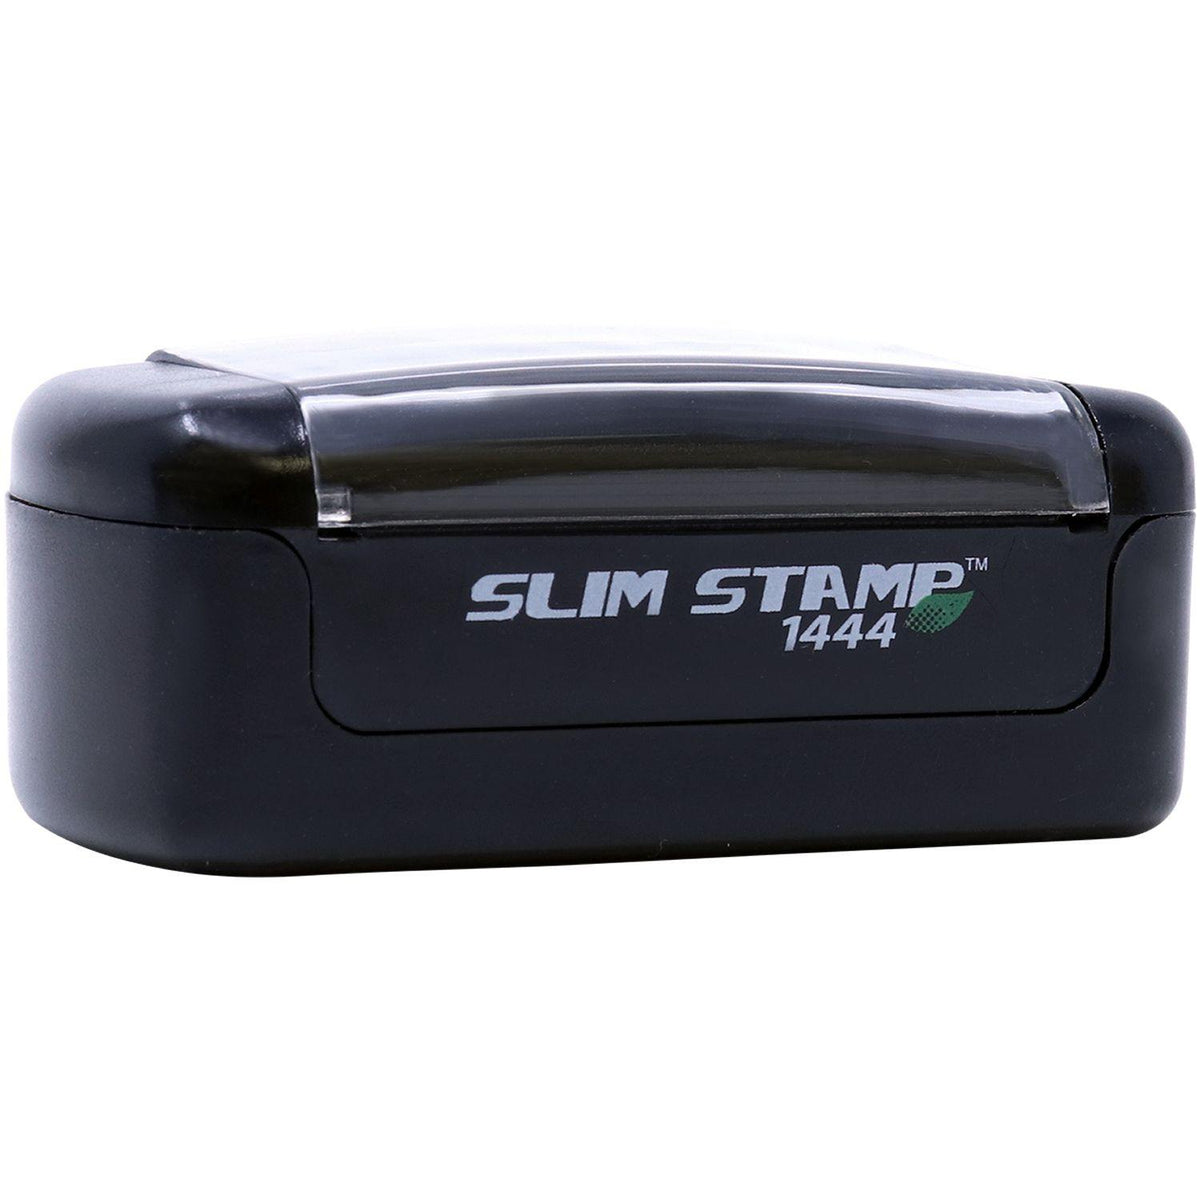 Alt View of Slim Pre-Inked Expres Entrega Inmedia Stamp Front View